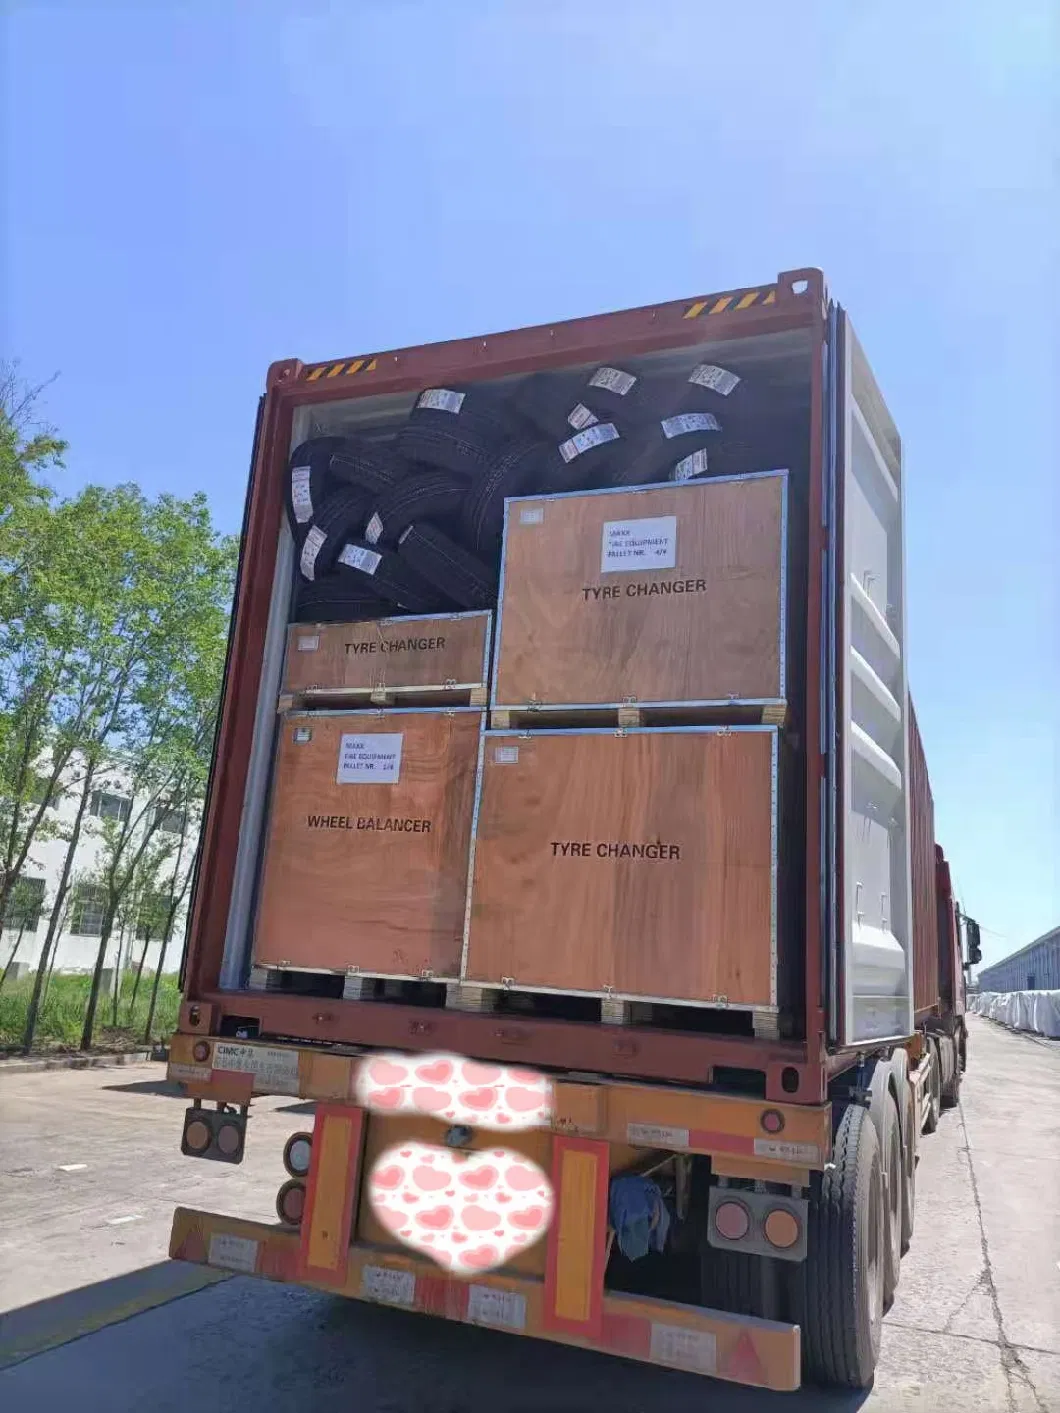 Qingdao Maxx Auto Parts Factory Supply Lead Pb Wheel Balance Weights for Truck Wheels Balancing